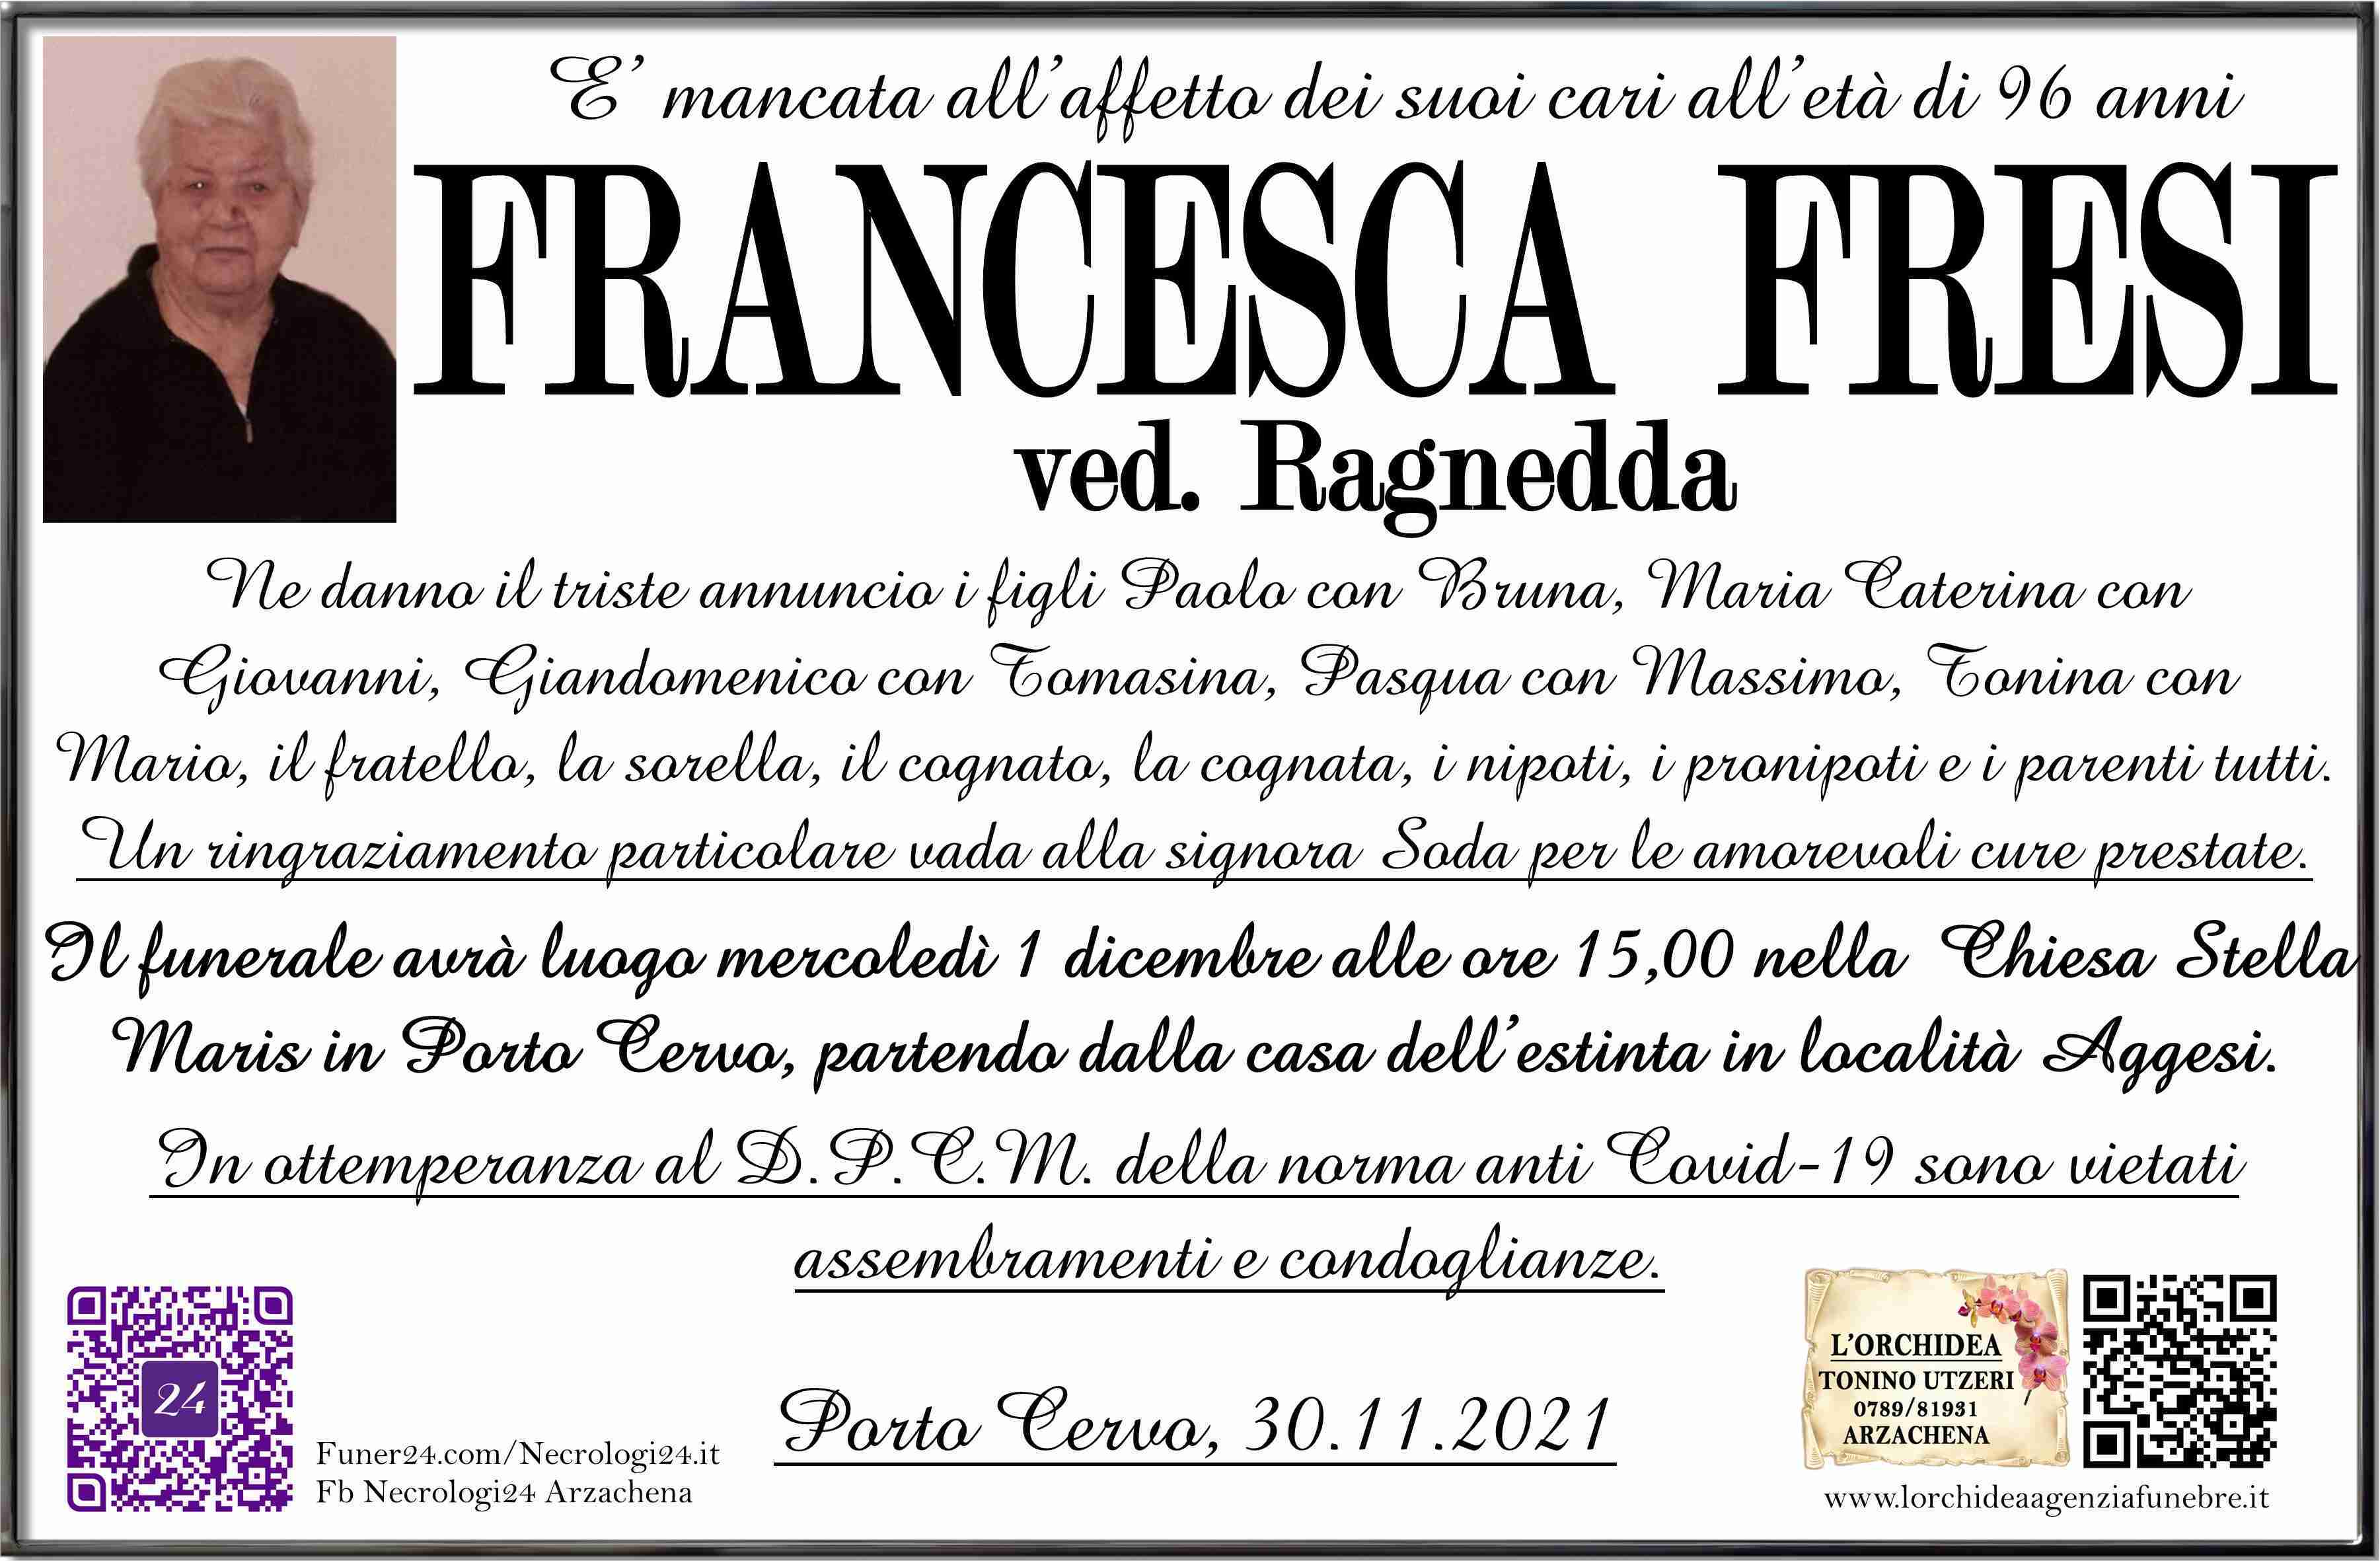 Francesca Fresi